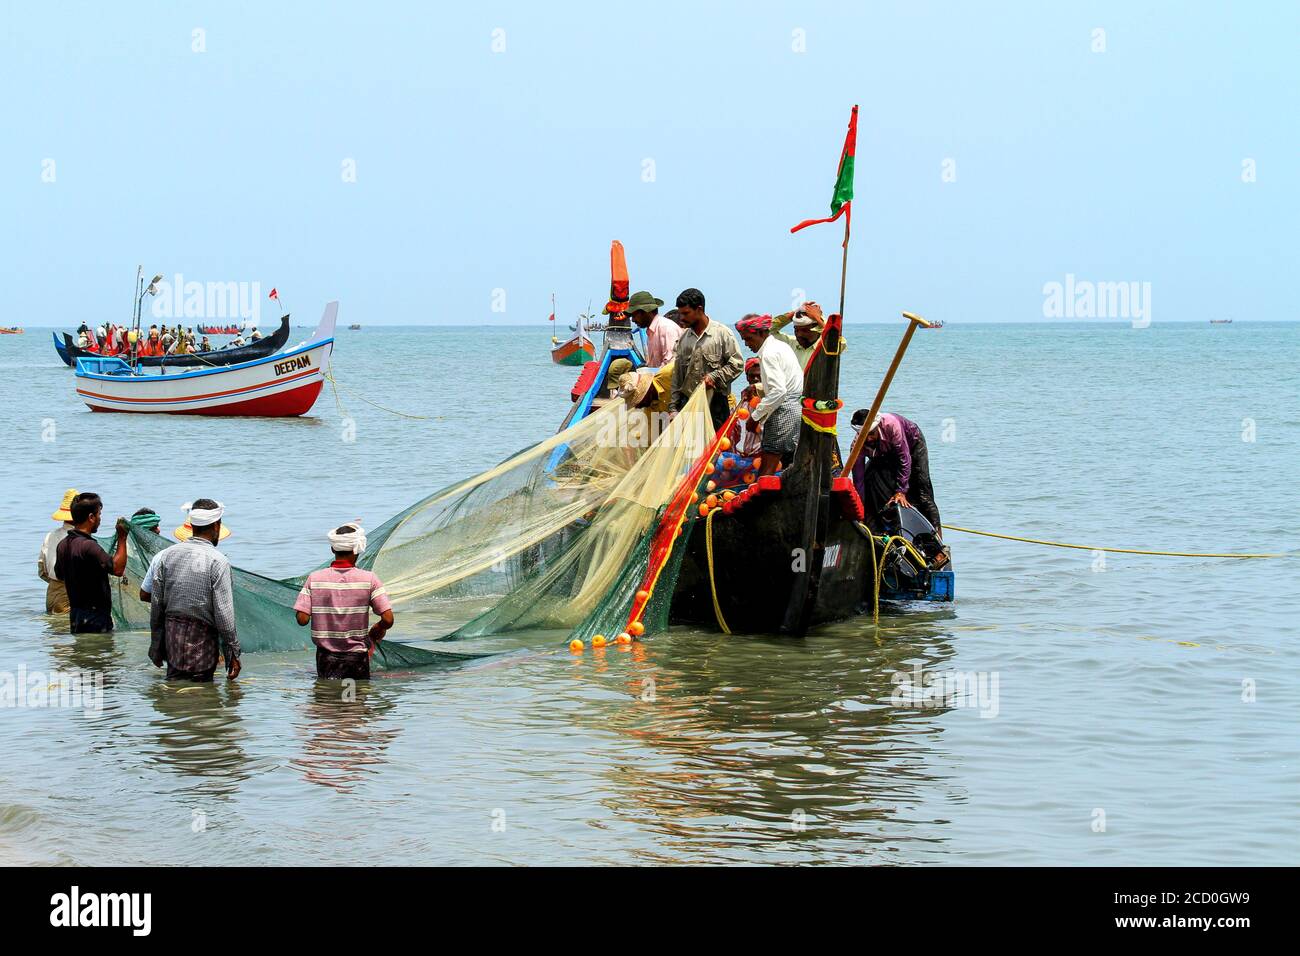 life of traditional fishing people in Kerala, wooden fisherman